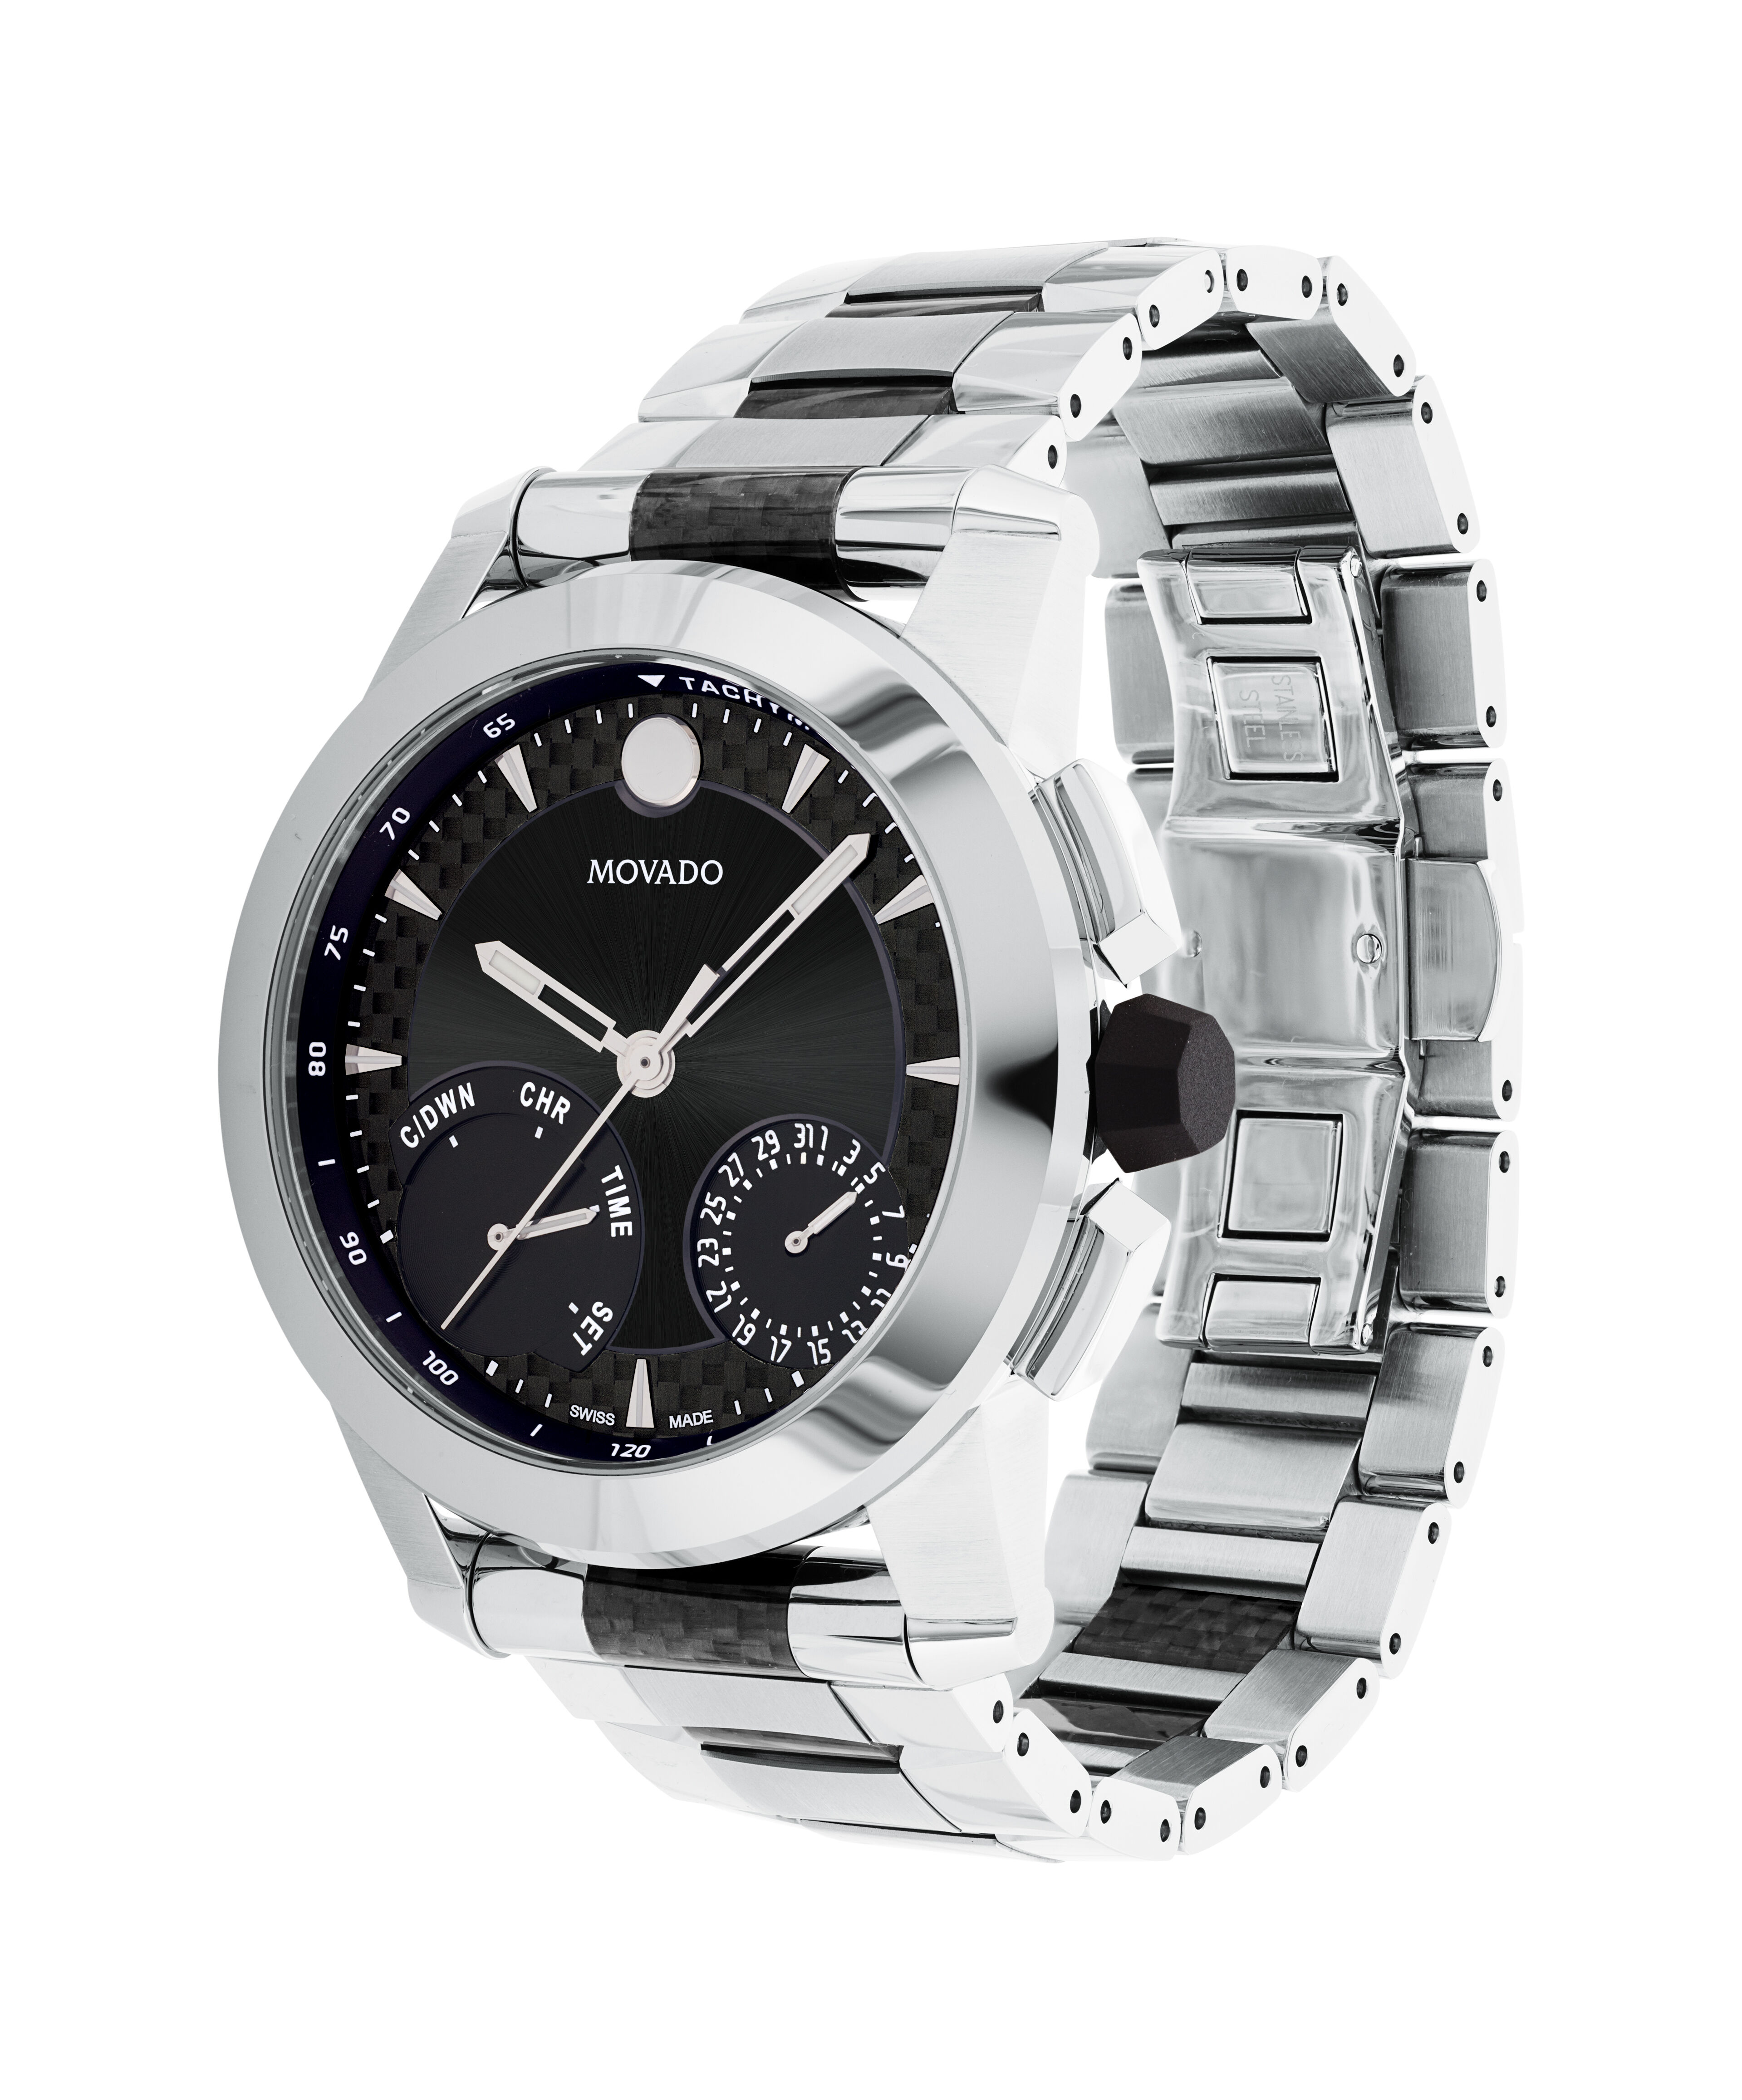 Omega Watch Replica Amazon